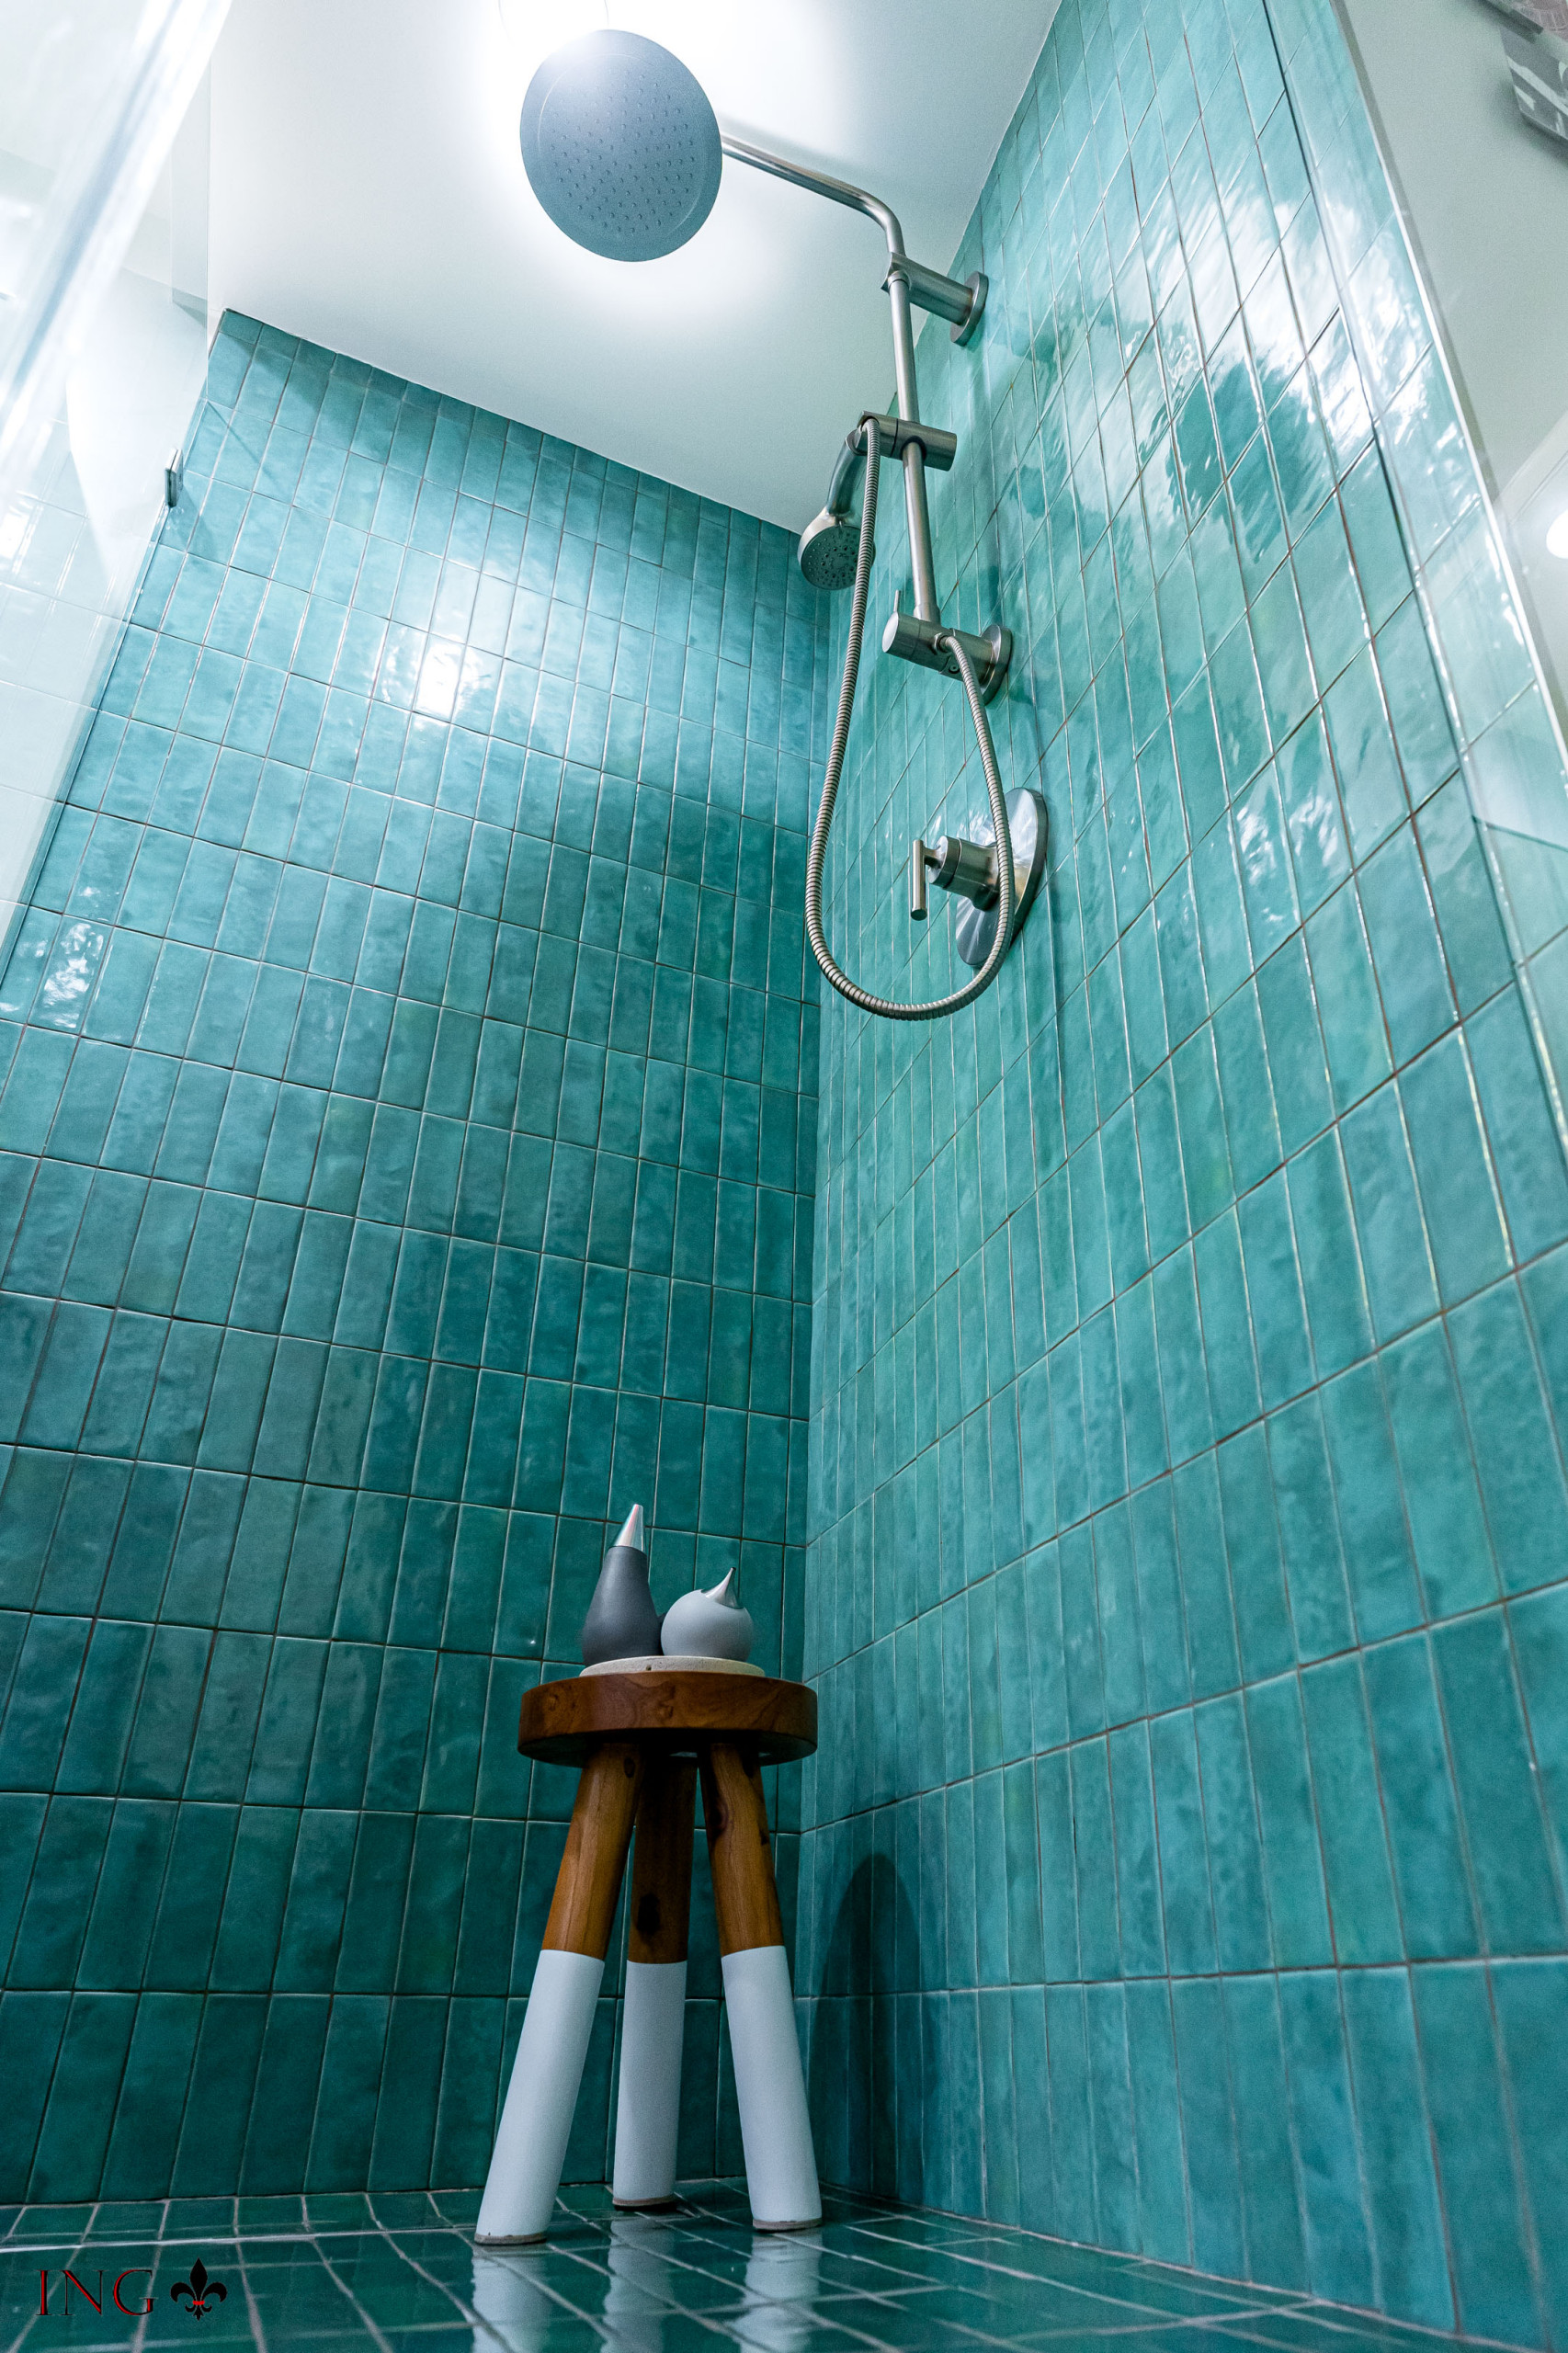 Tile Installation / Shower & Bathroom